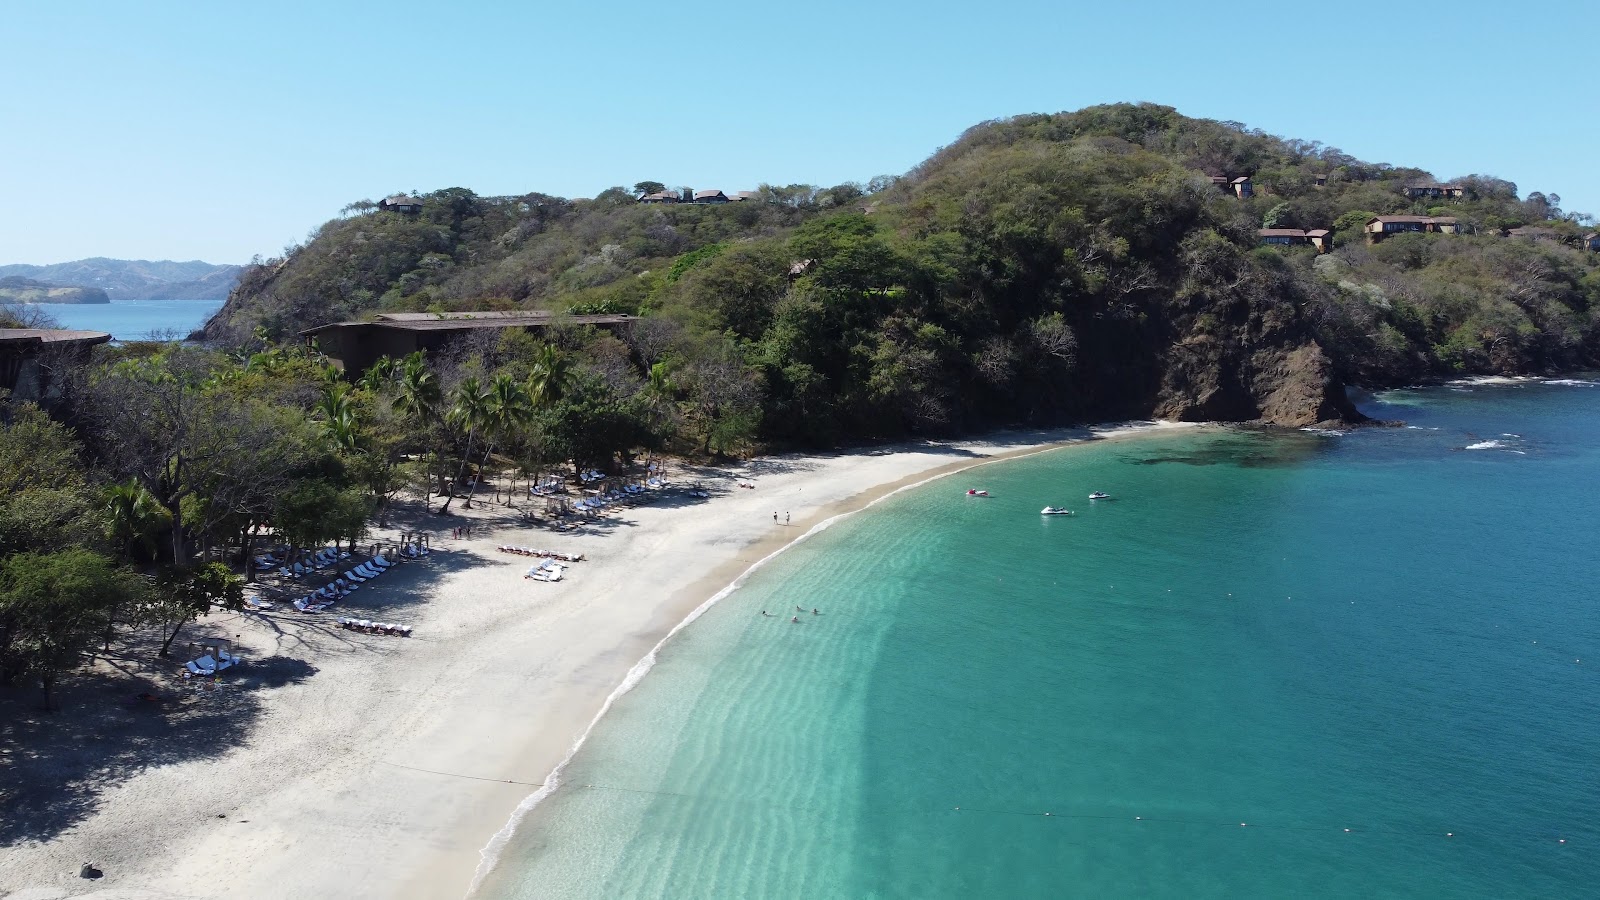 Photo of Virador beach located in natural area